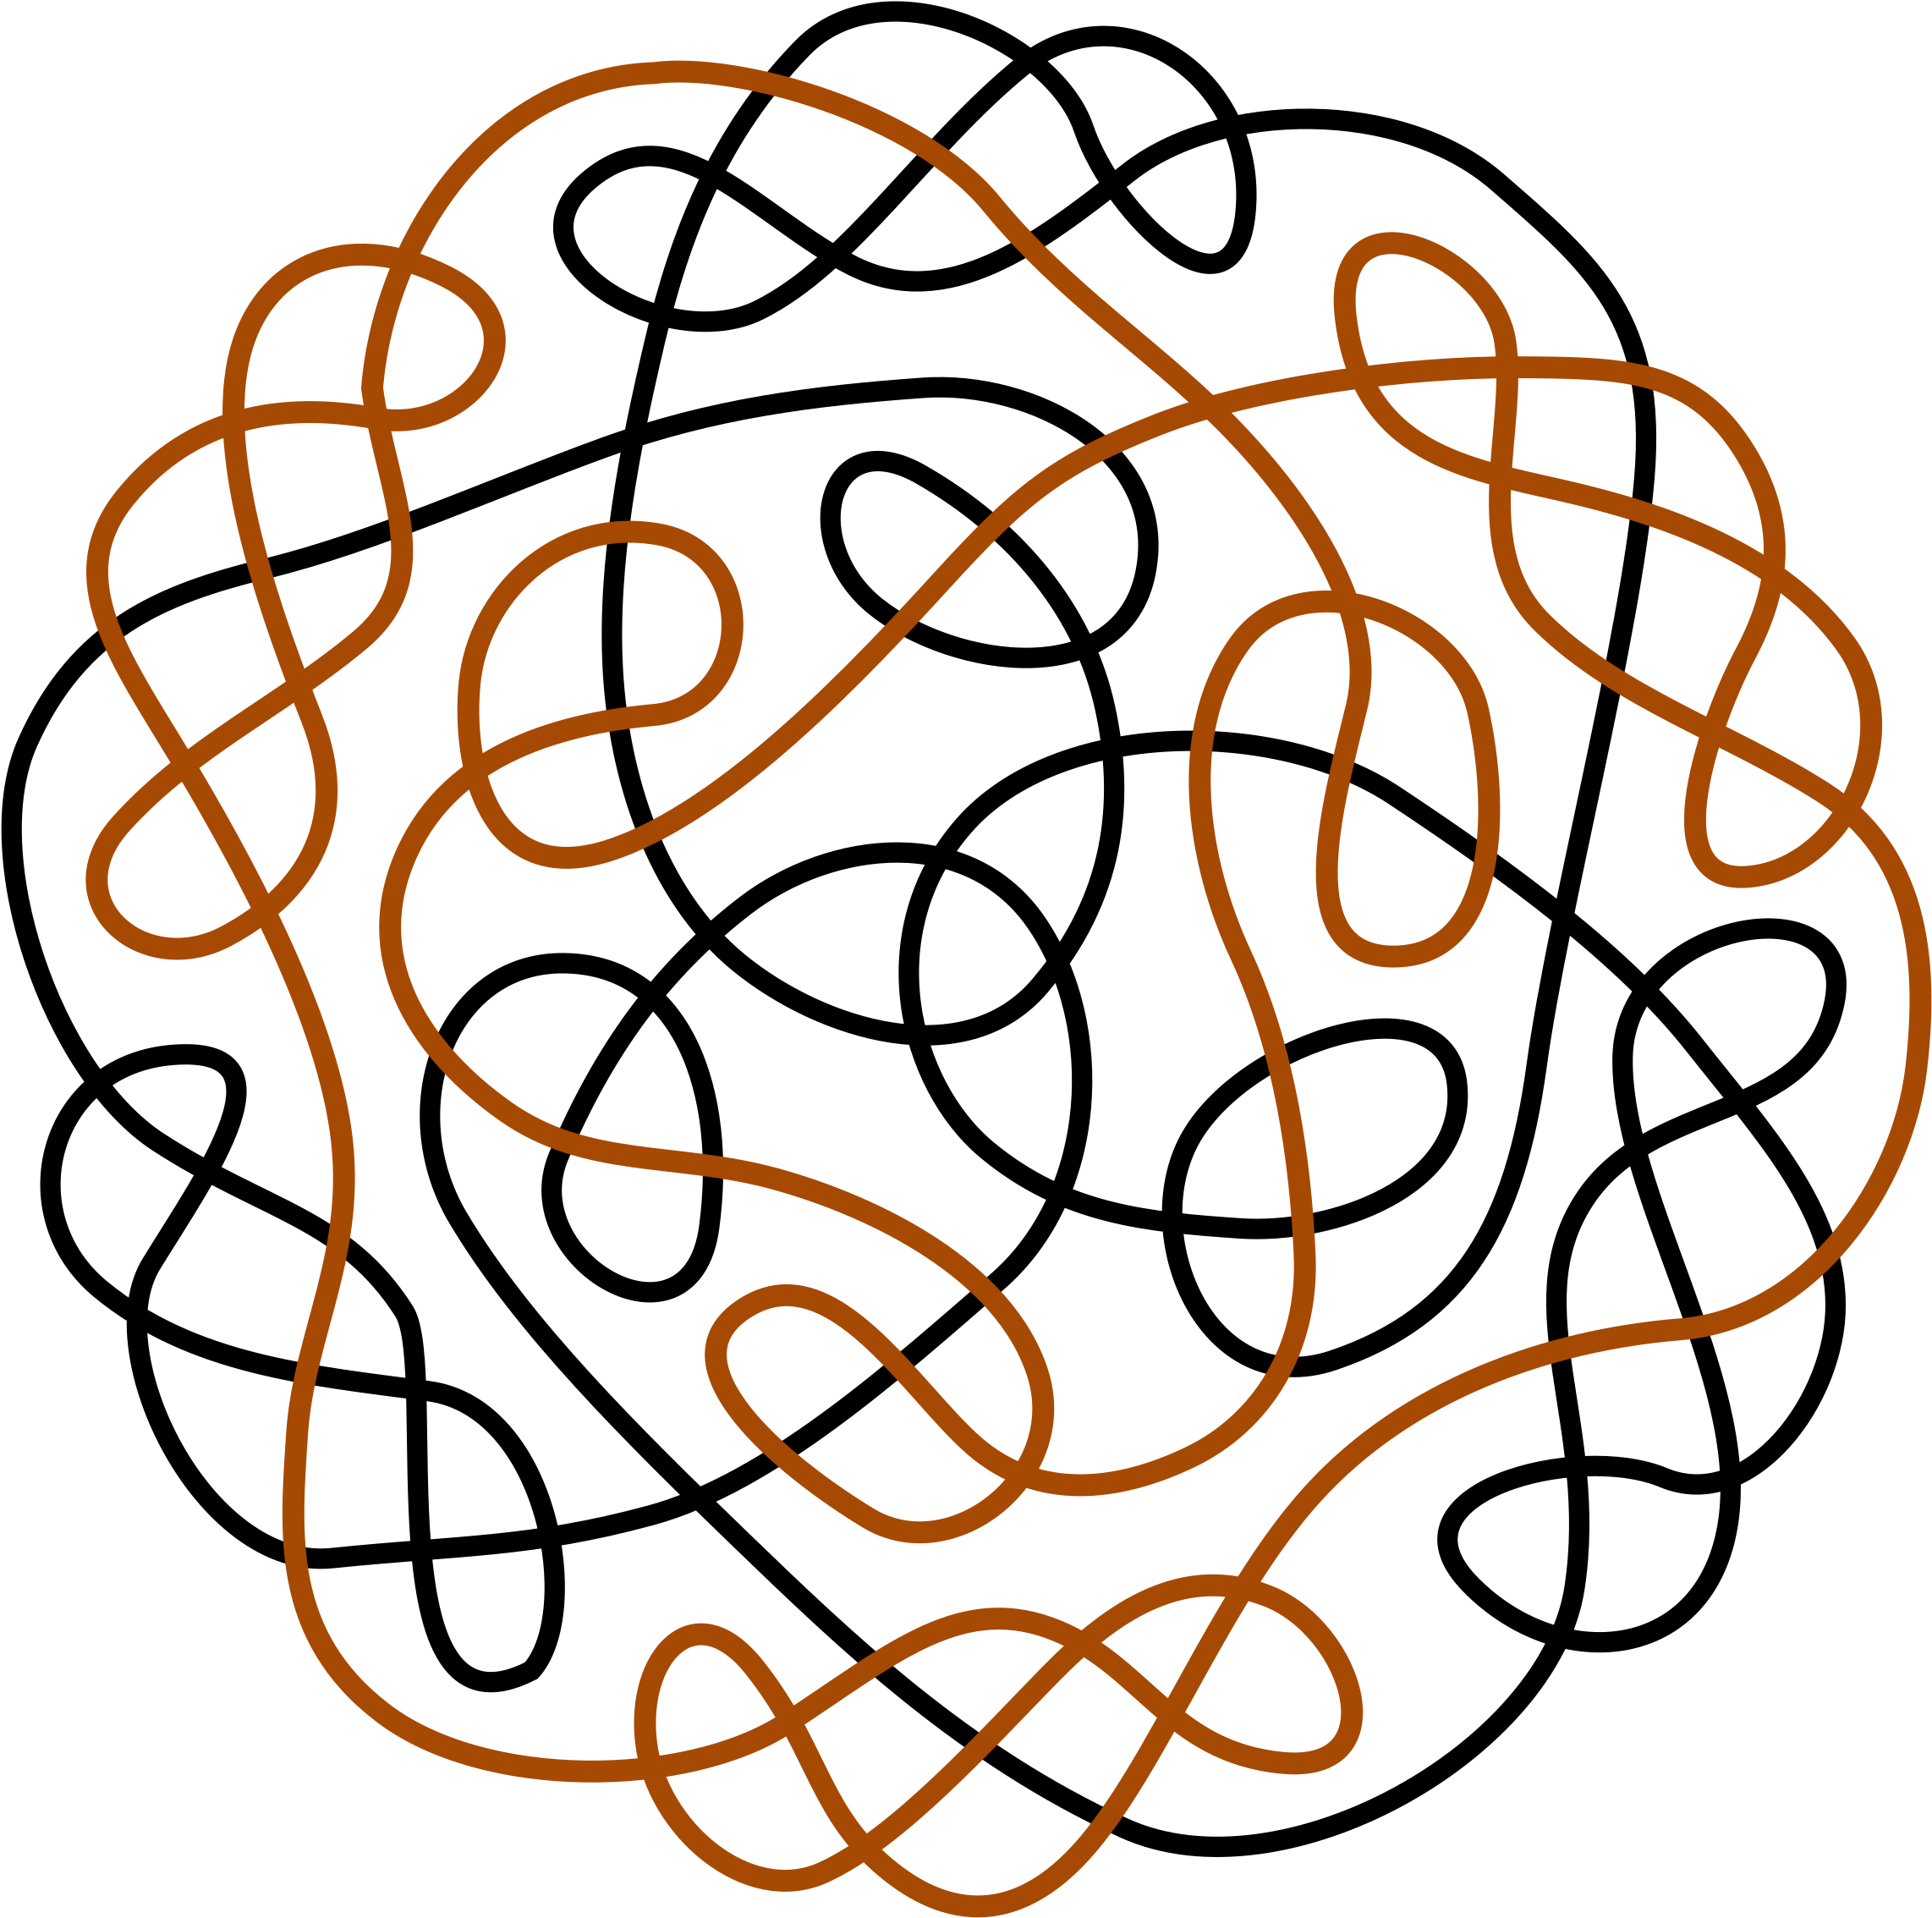 Celtic Knot Clip Art - Tostadora.co.uk Bags Celtic Knot, Shoulder Bag (2400x3394)